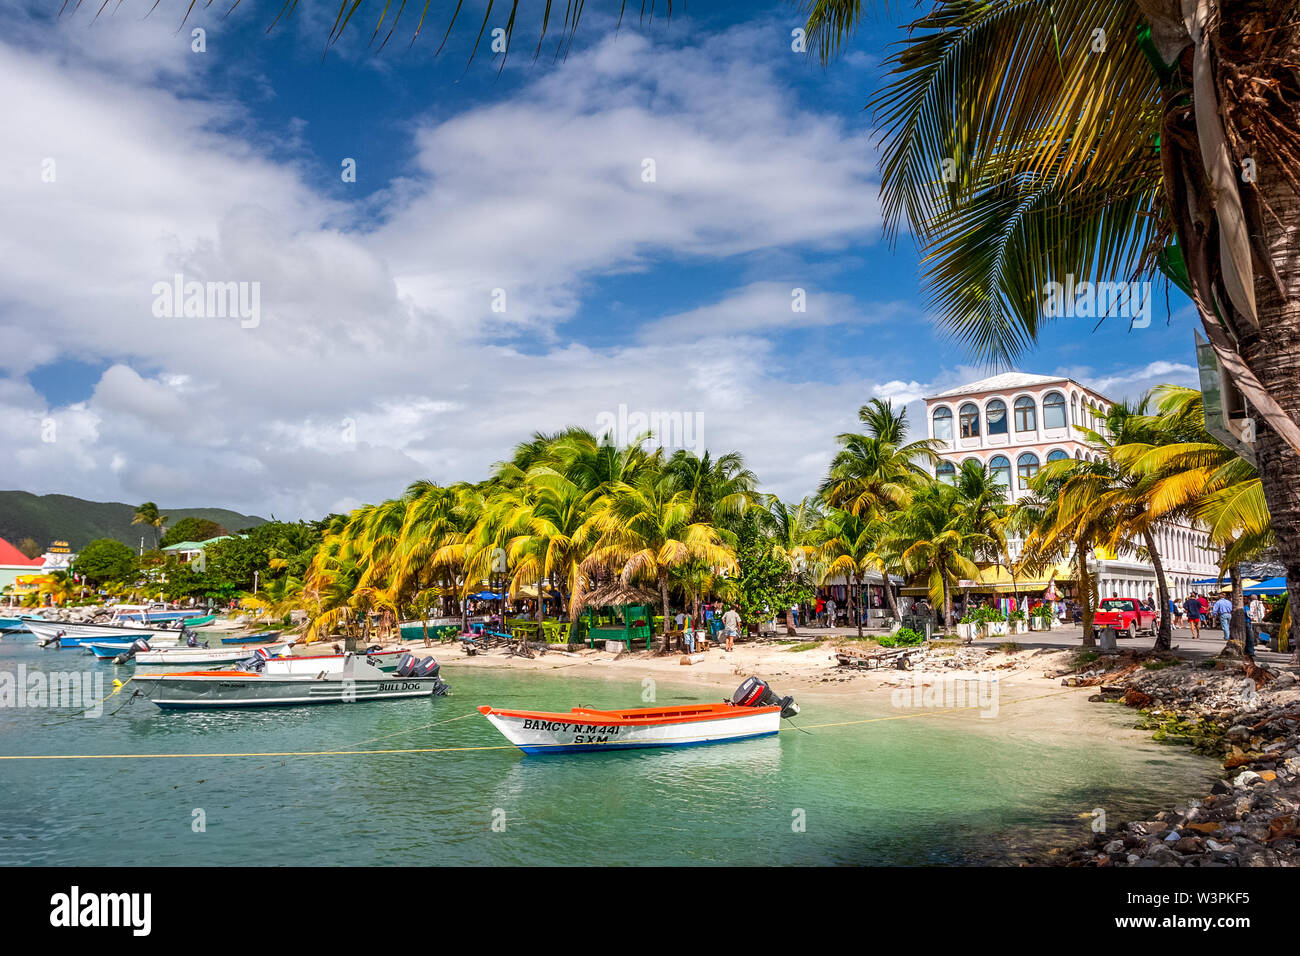 Sint Maarten/Karibik/Niederlande - Januar 23.2008: Blick auf den Hafen mit Booten in das blaue Meer mit Palmen verankert. Stockfoto